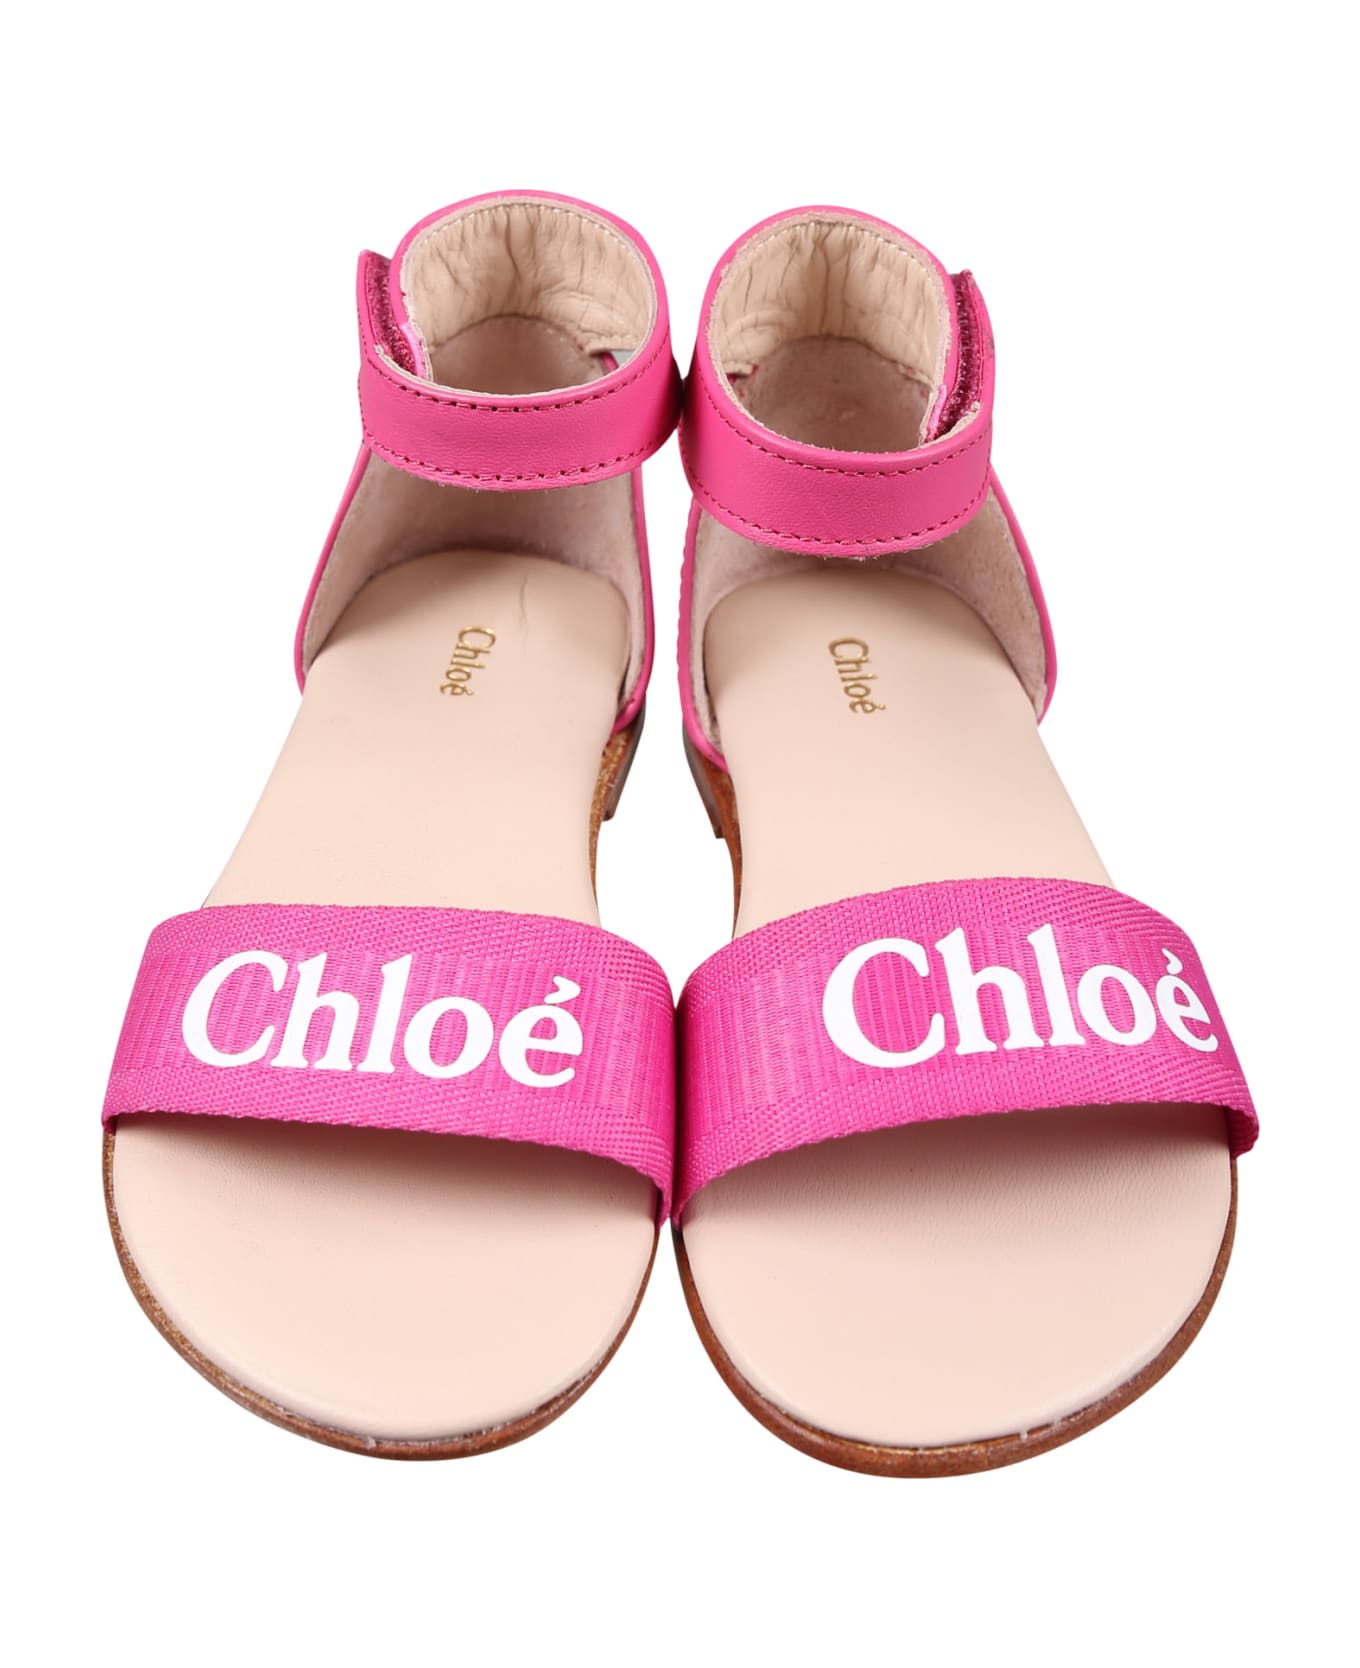 Chloé Fuchsia Sandals For Girl With Logo - Fuchsia シューズ